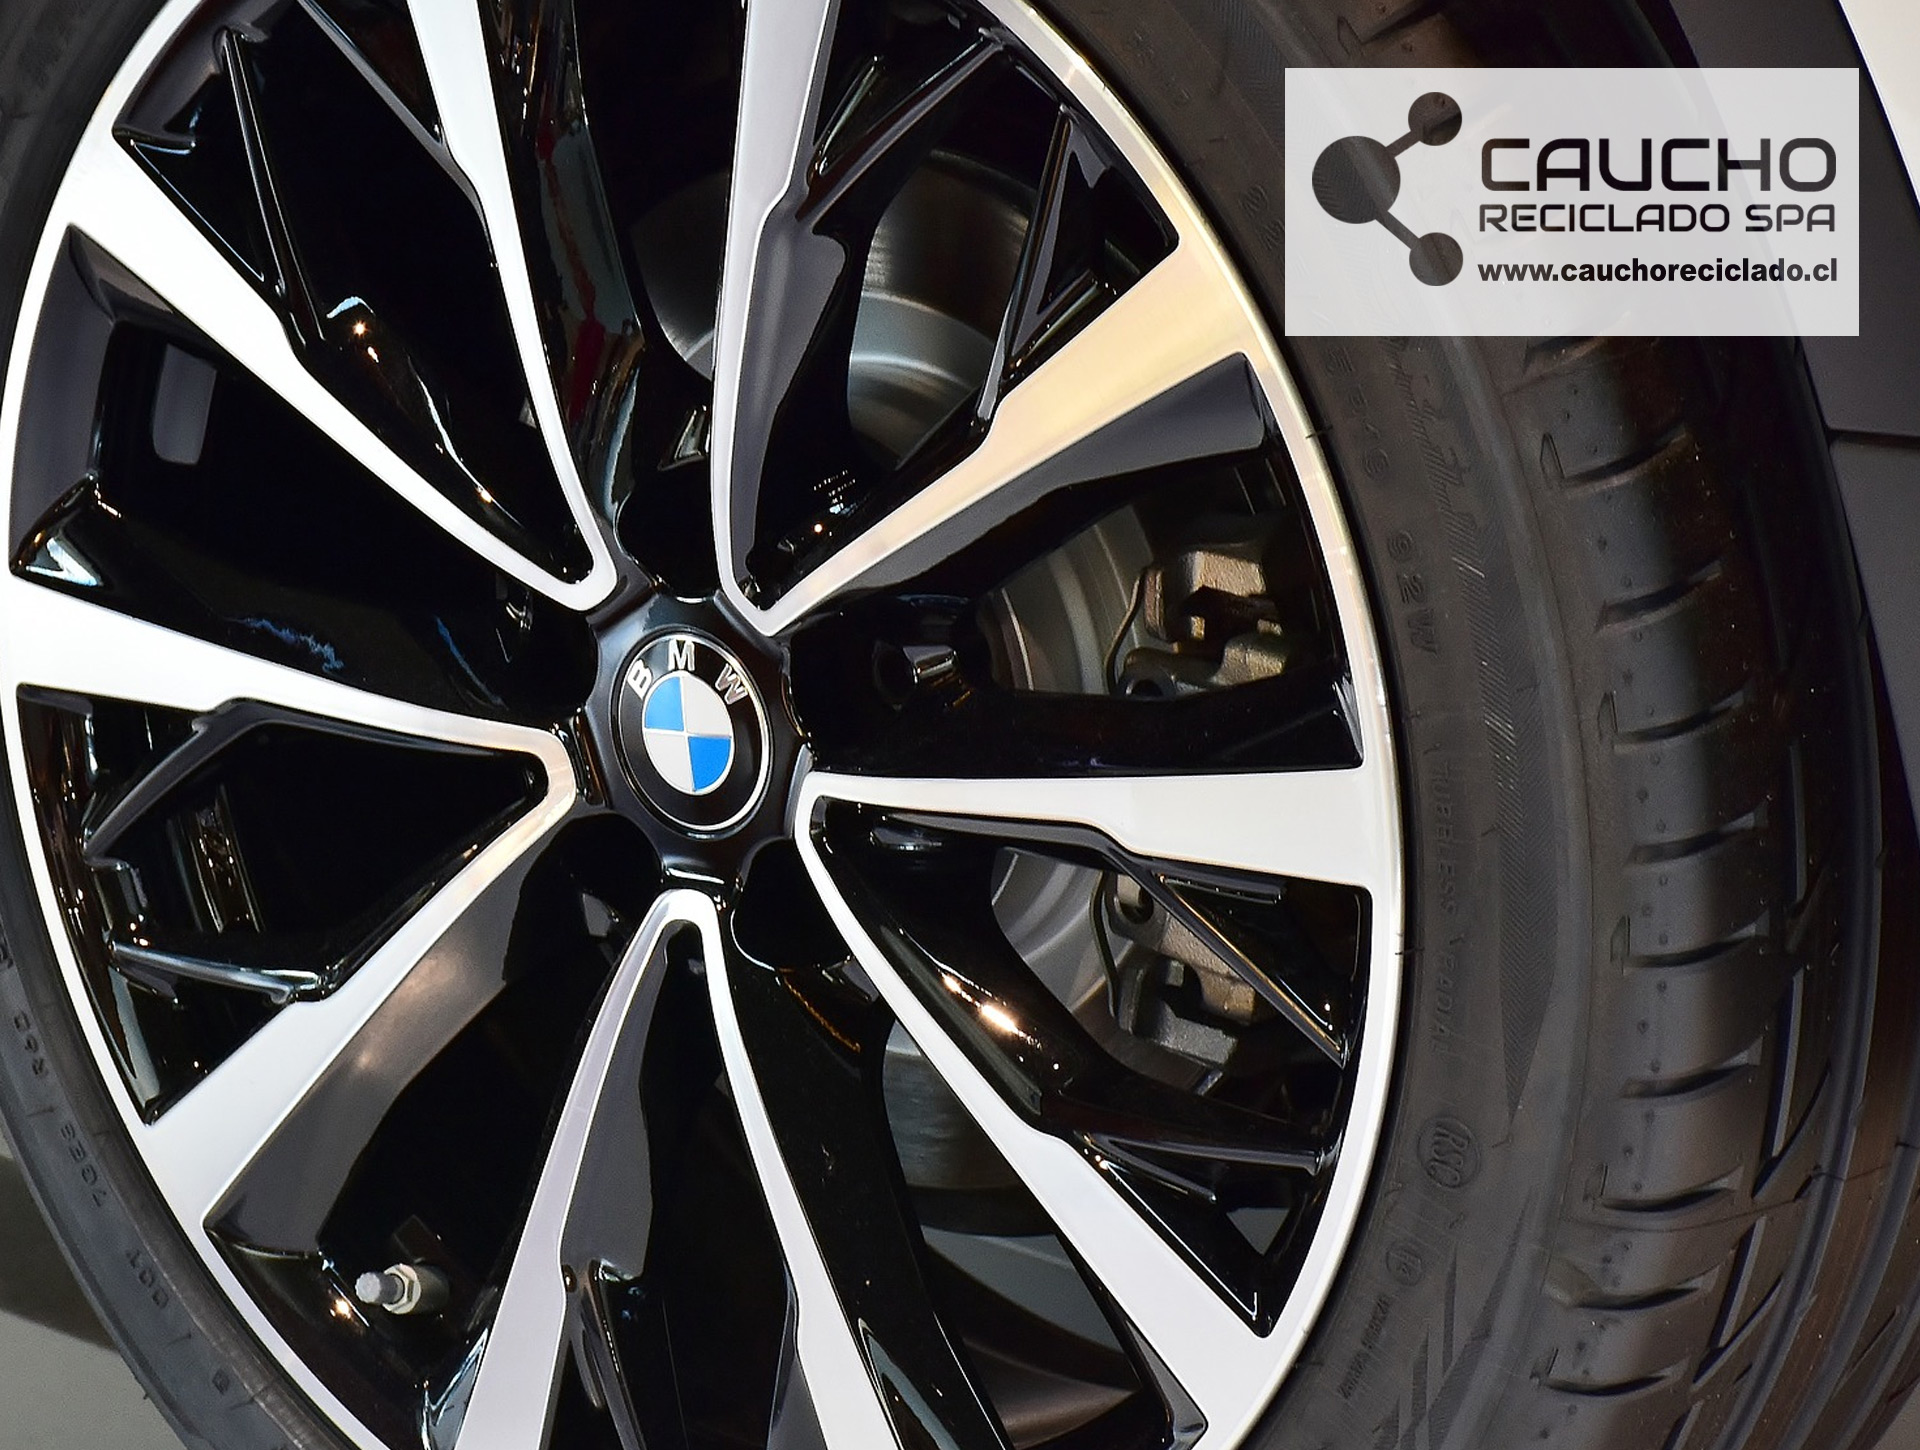 BMW incorpora el neumático ecológico FSC